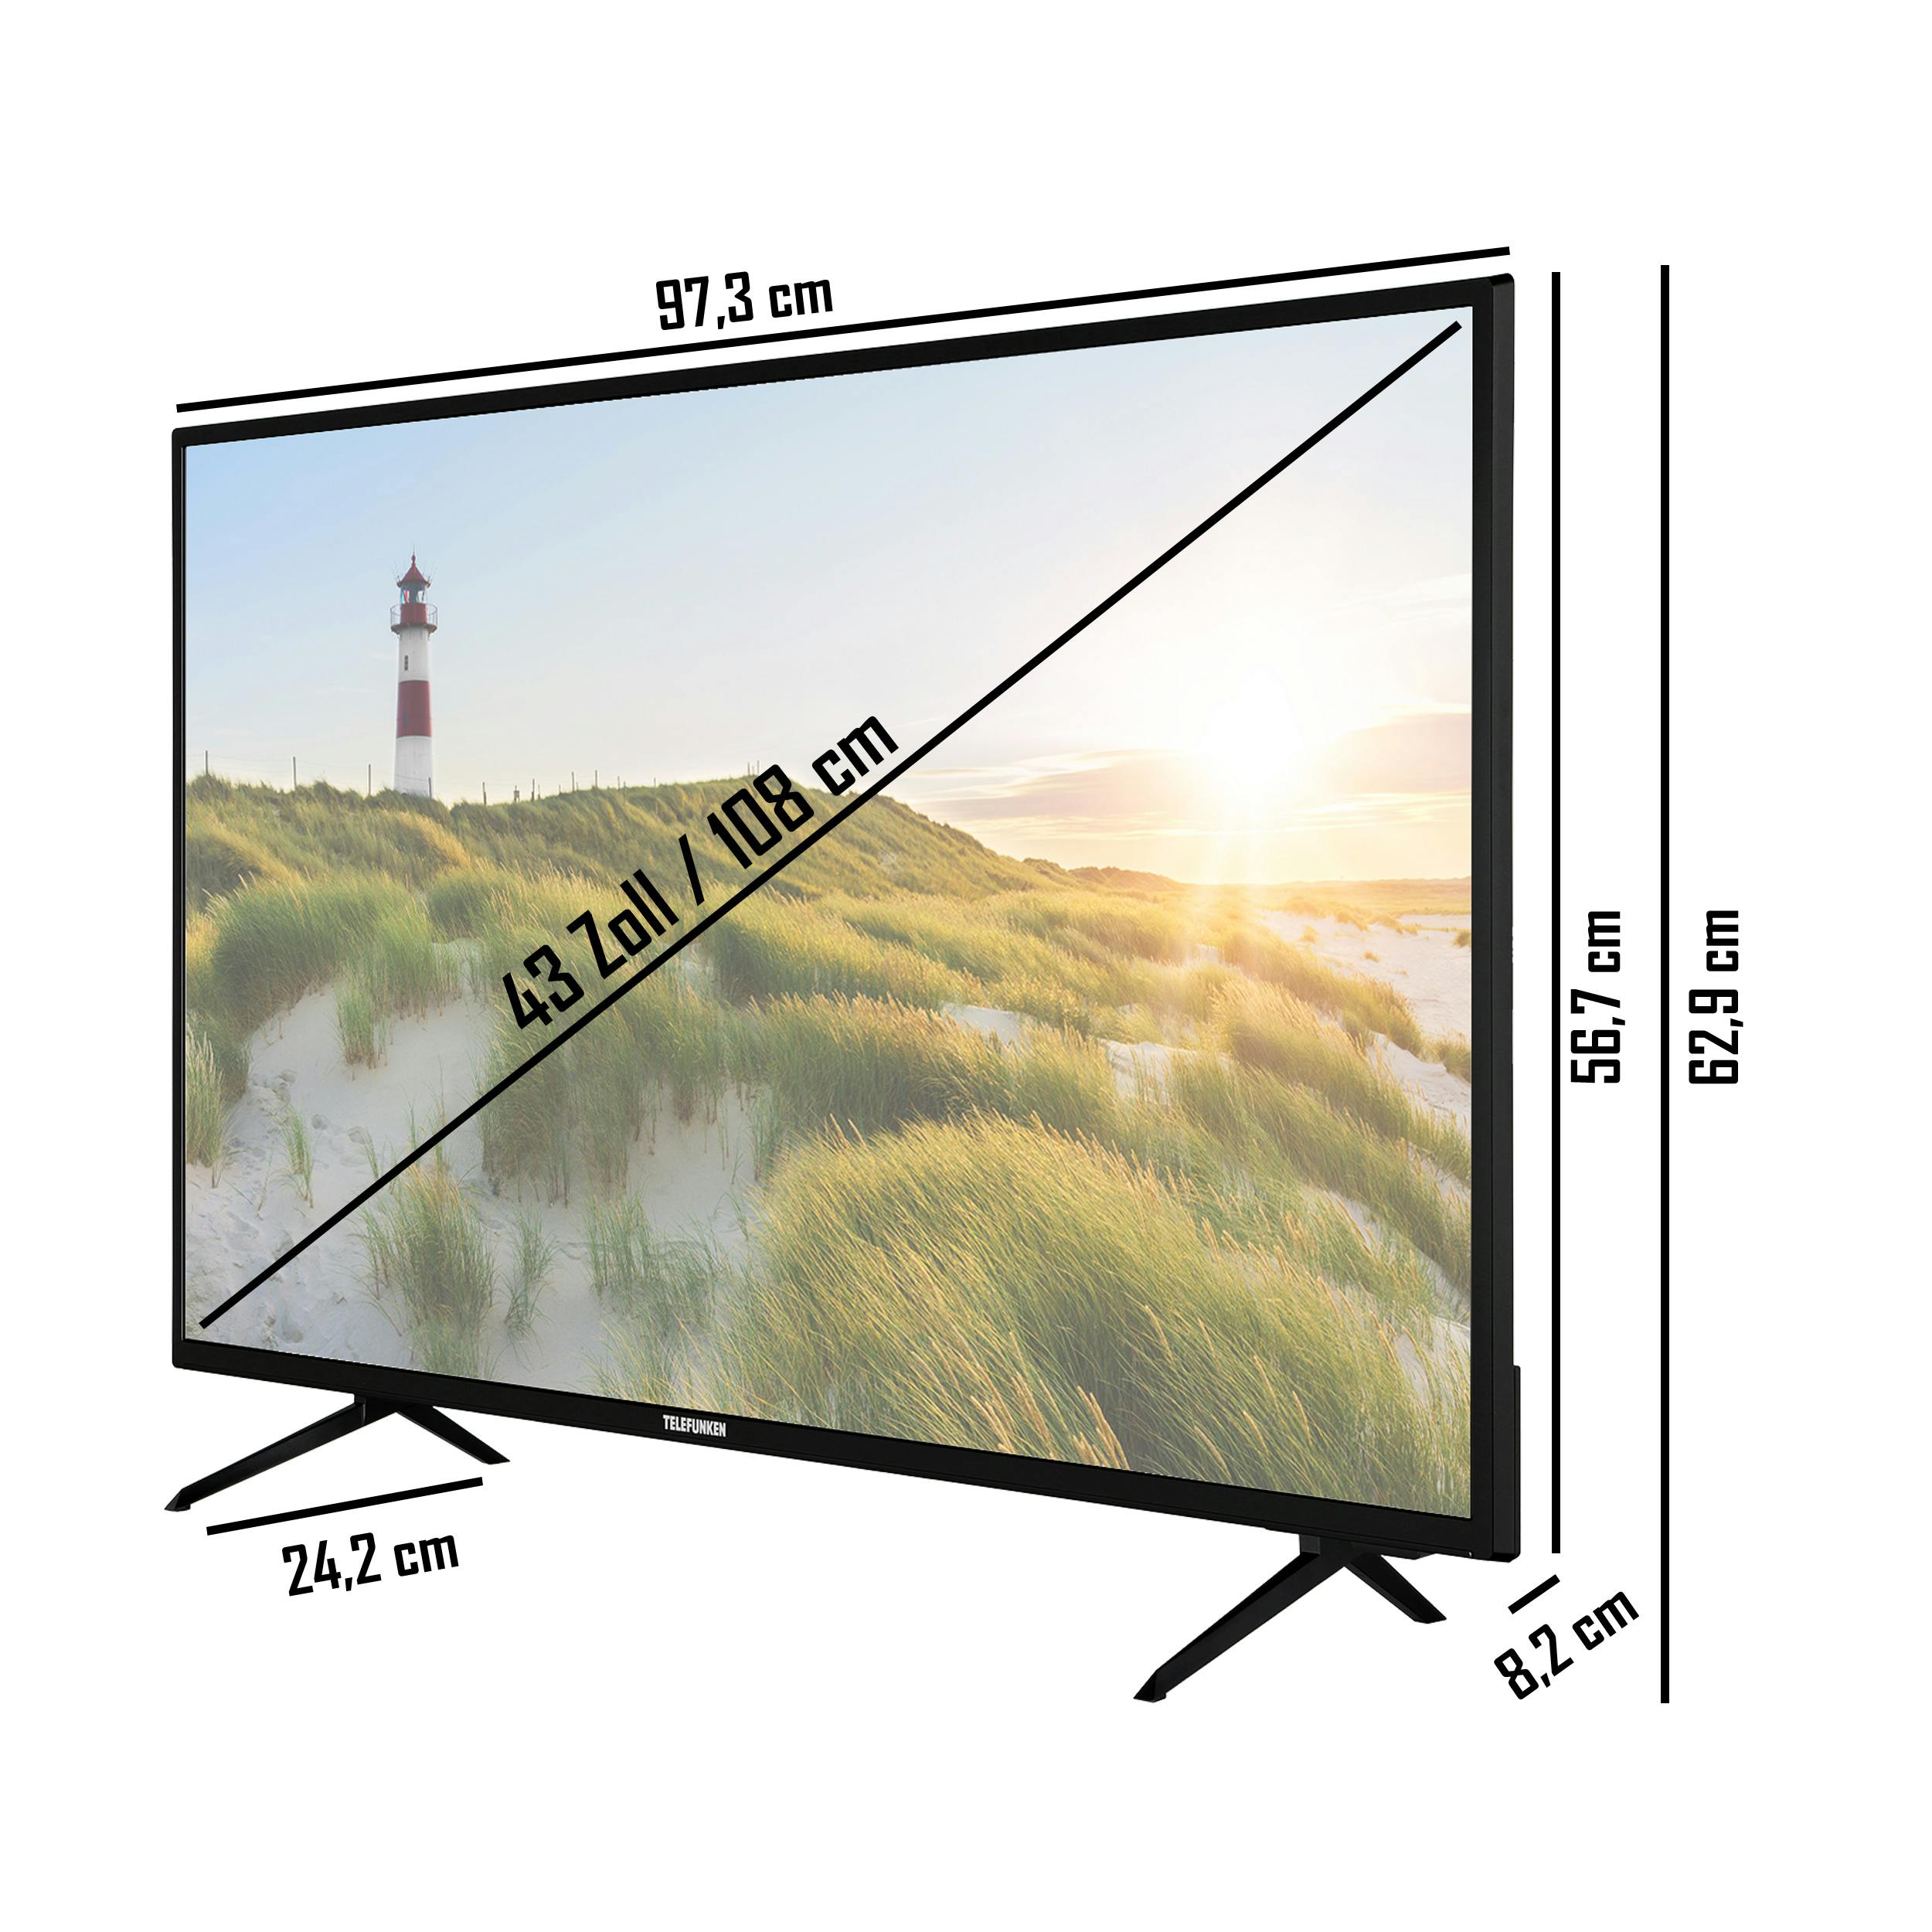 Telefunken XF43K550 43 Zoll Fernseher/Smart TV (Full HD, HDR, Triple-Tuner)  - 6 Monate HD+ inkl. | METRO Marktplatz